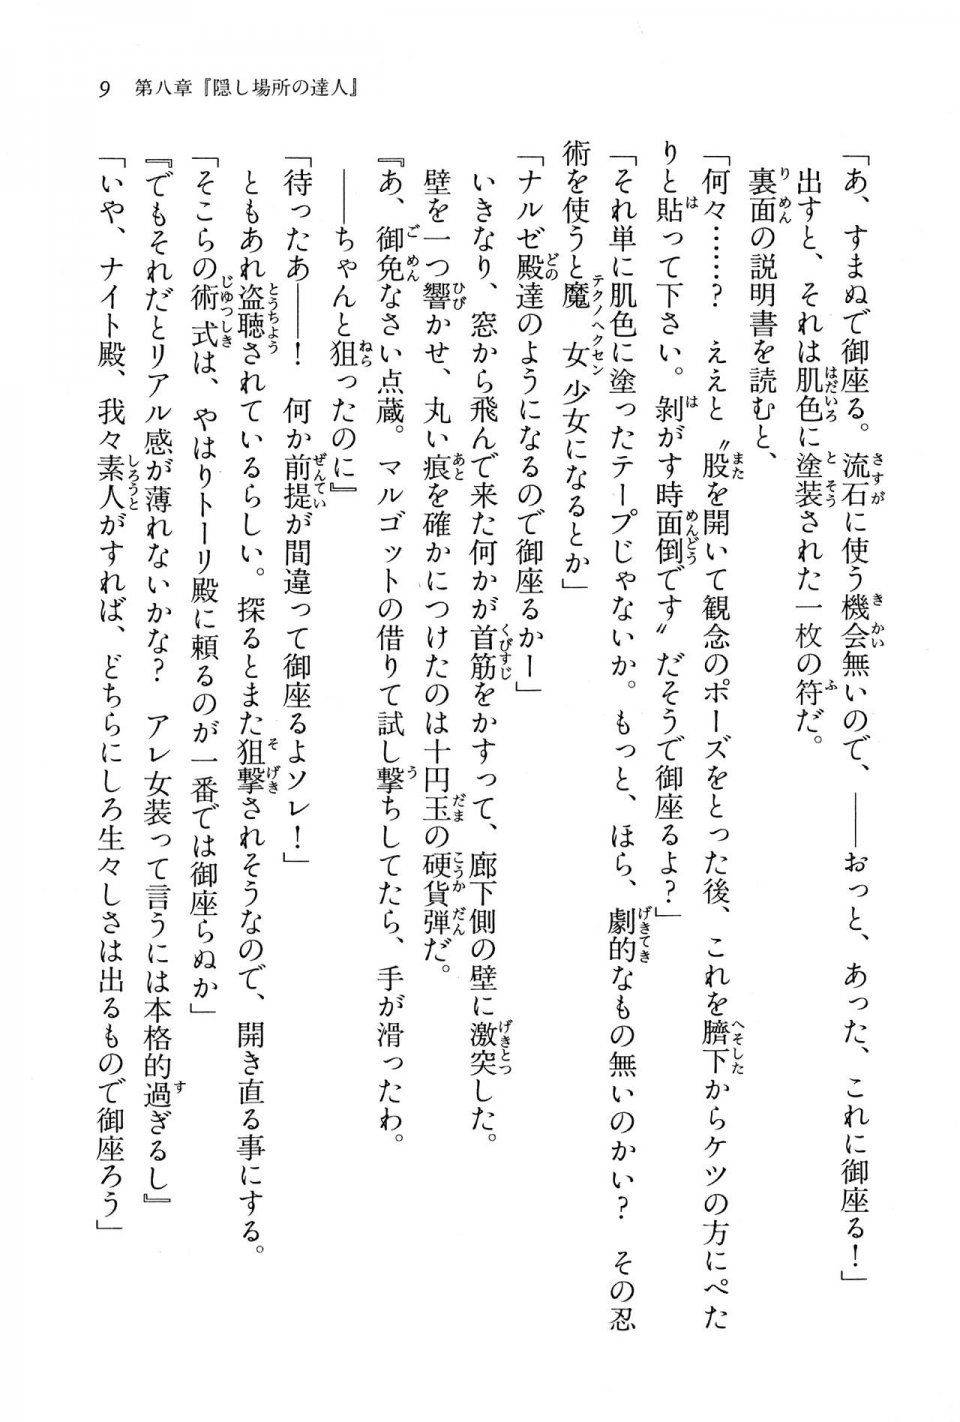 Kyoukai Senjou no Horizon BD Special Mininovel Vol 8(4B) - Photo #13